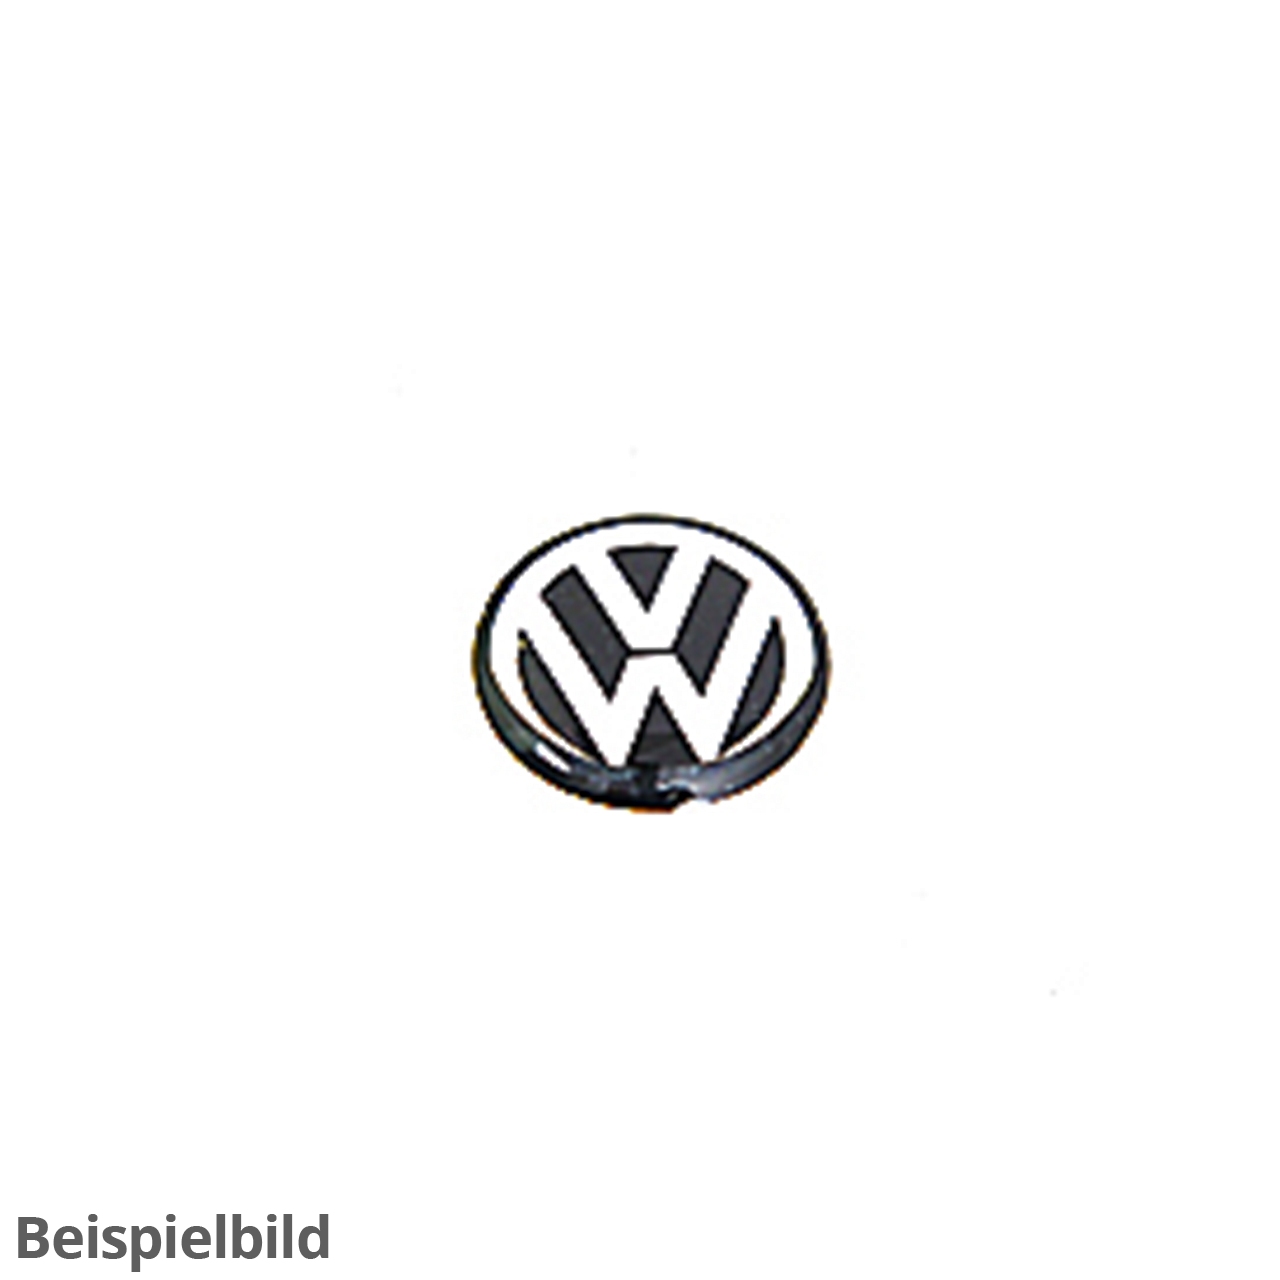 Genuine Volkswagen Audi - 3C0837891A - 12mm VW Sign For Key Fob